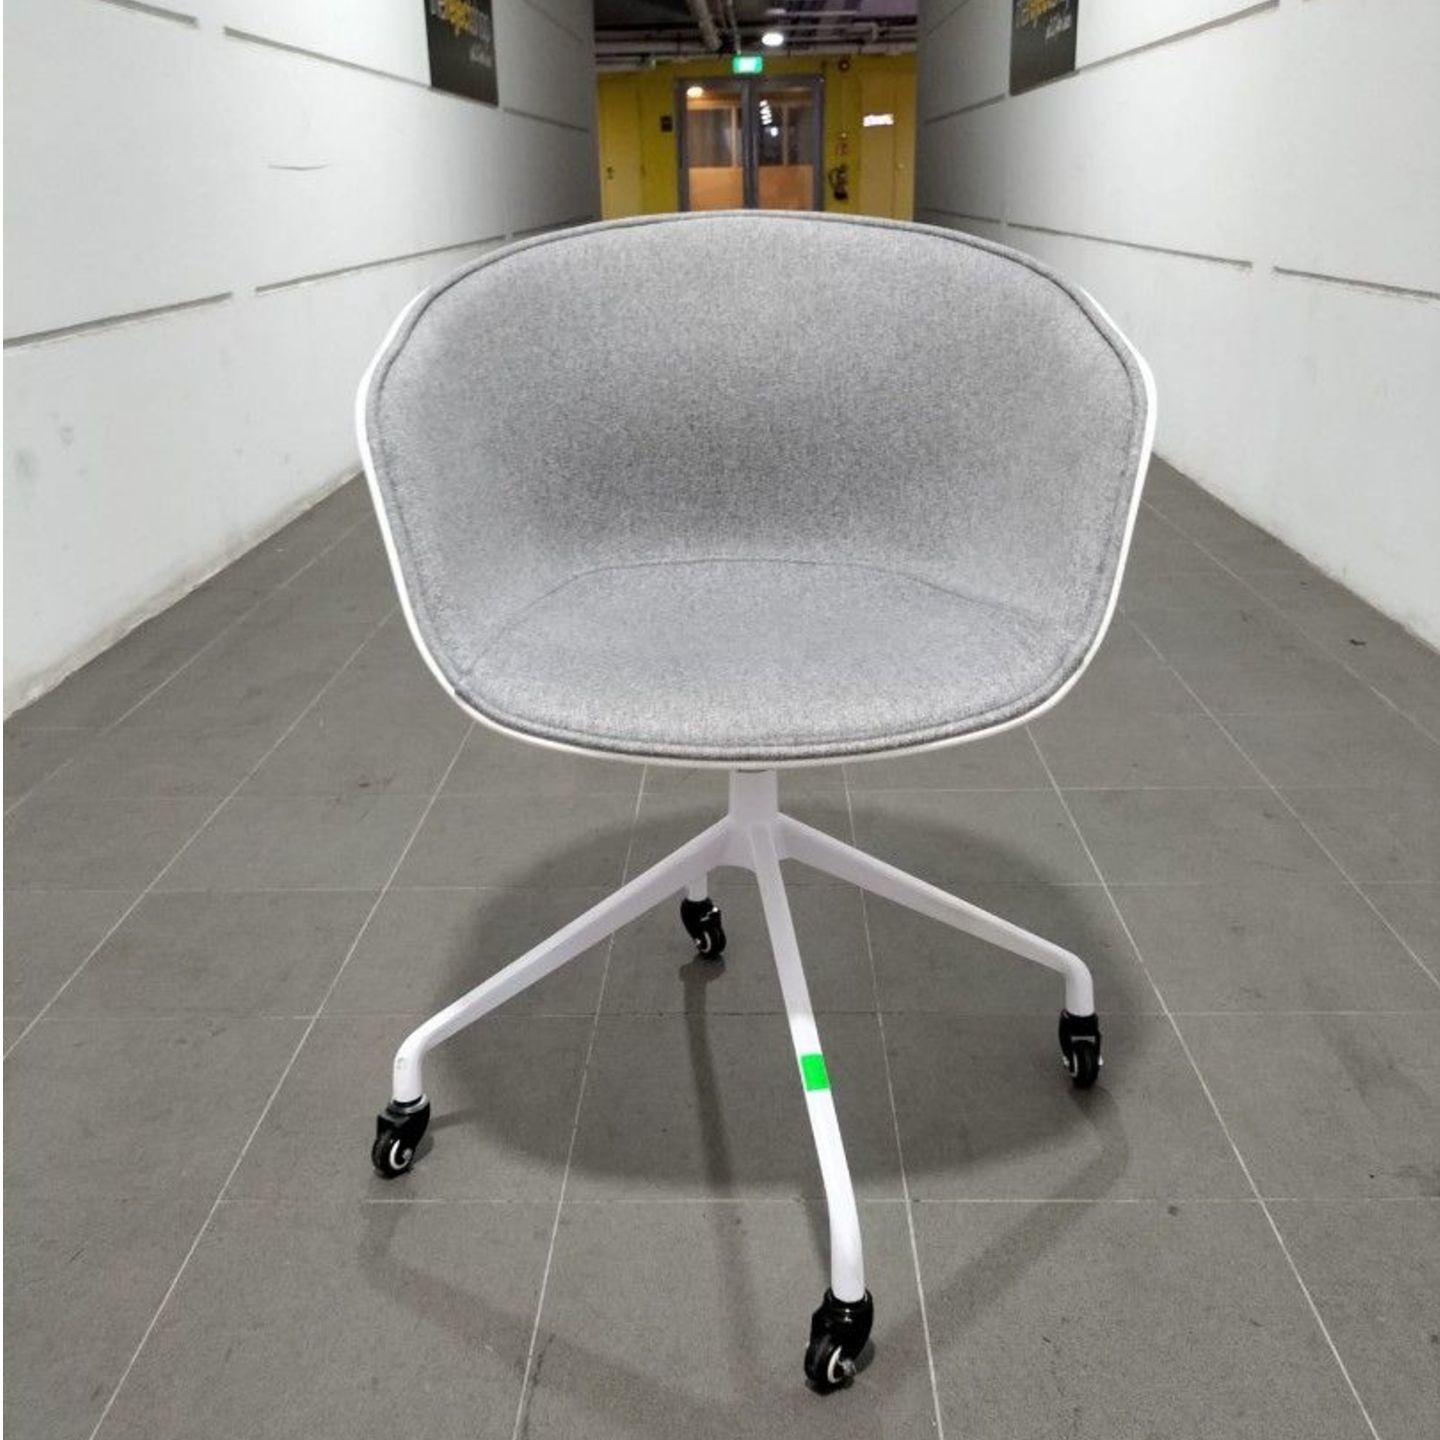 KOVJIC Office Chair in GREY & WHITE